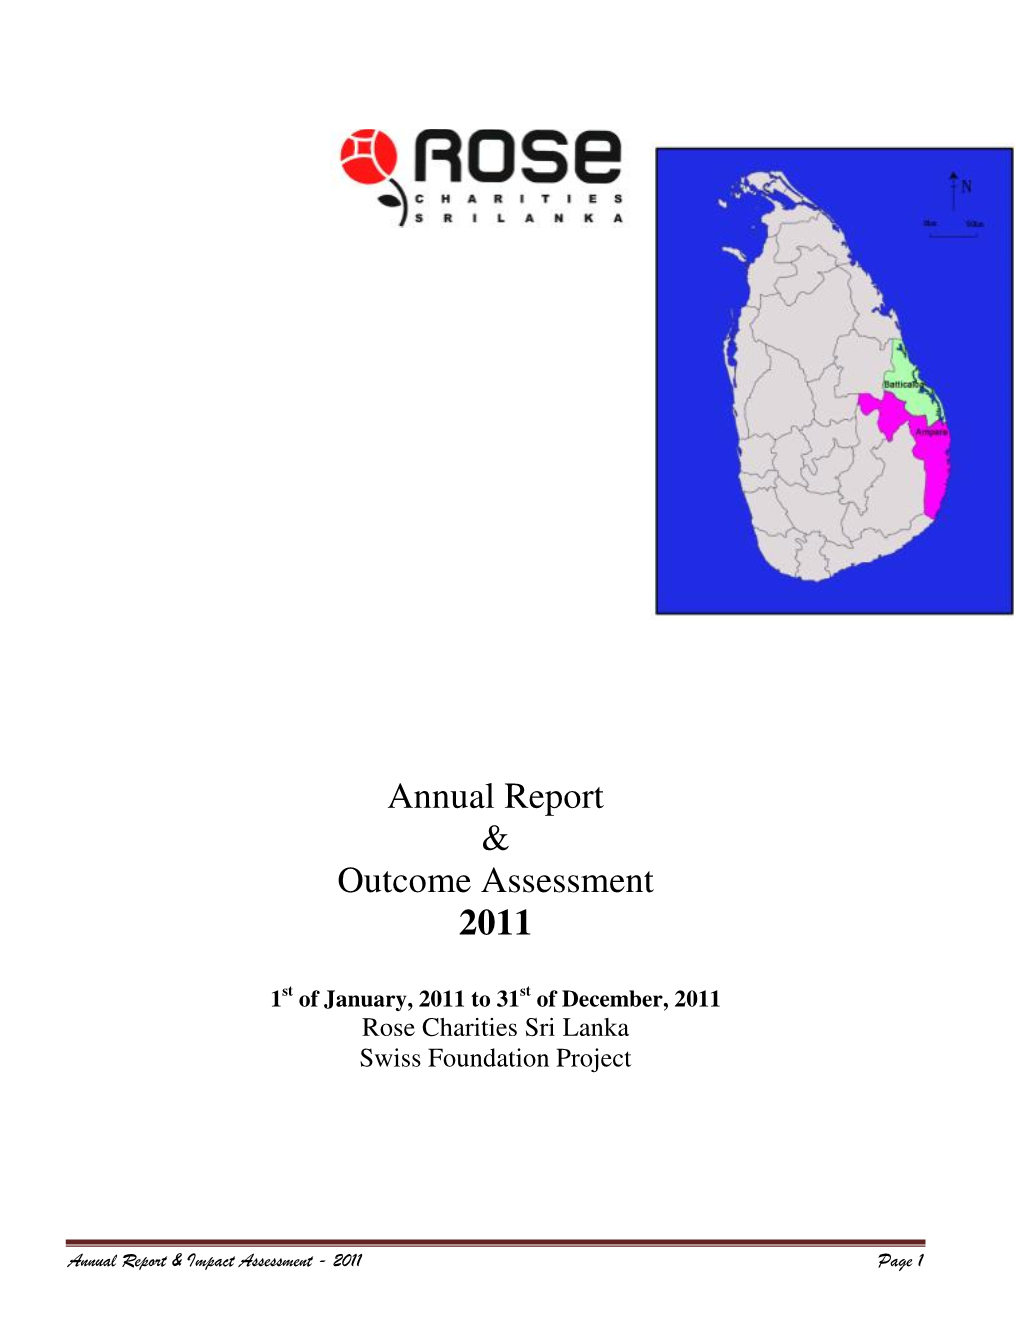 Annual Report & Outcome Assessment 2011